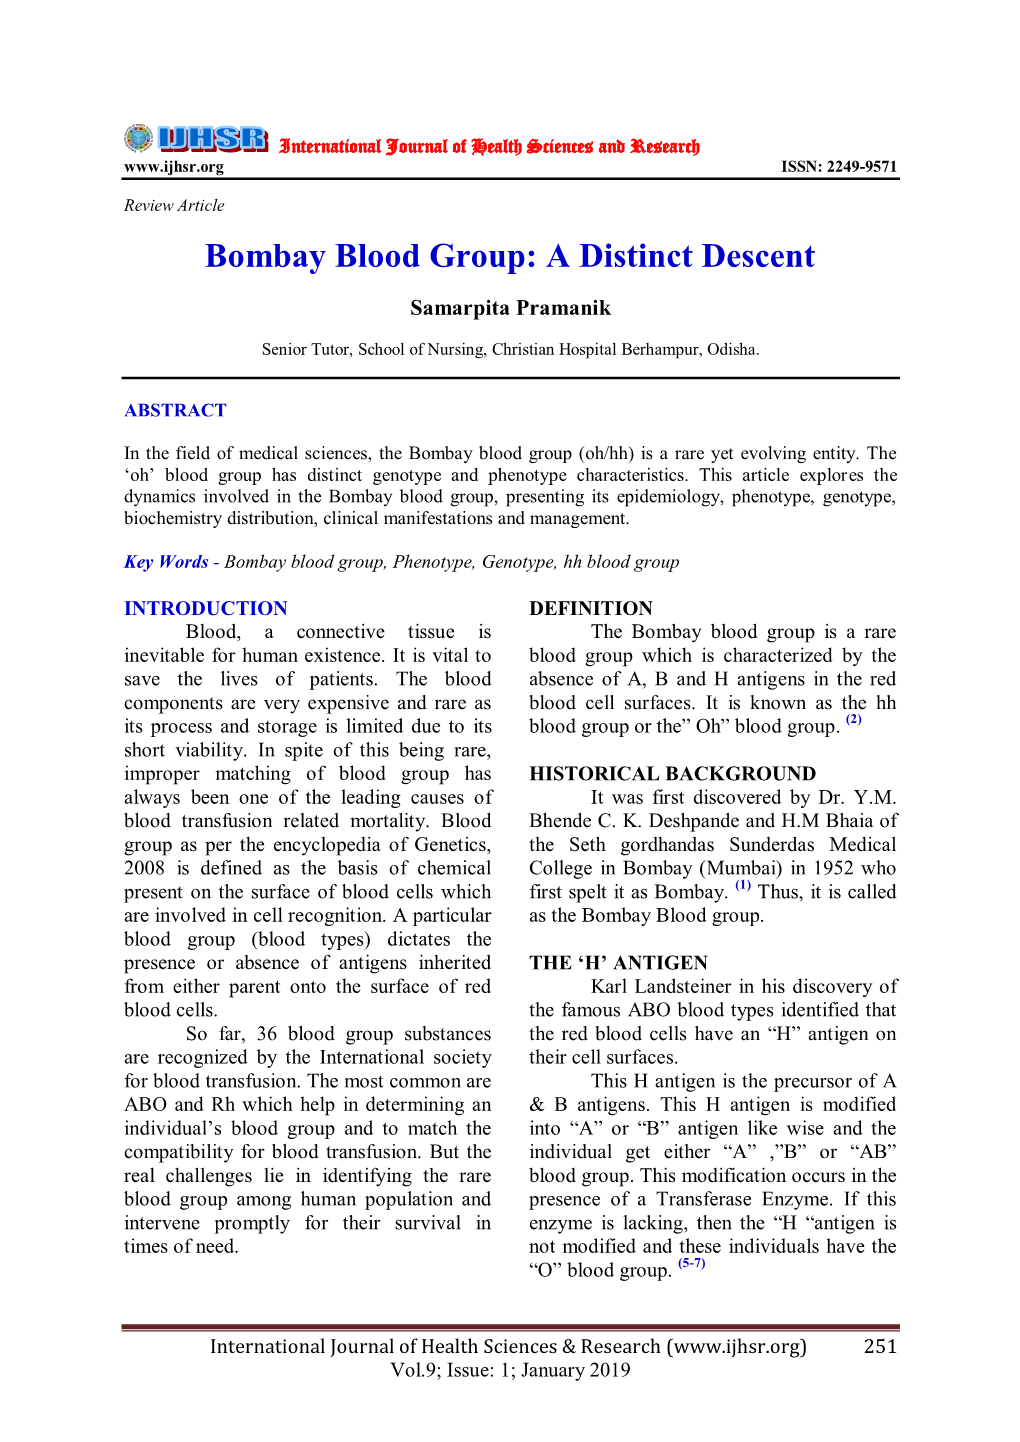 Bombay Blood Group: a Distinct Descent